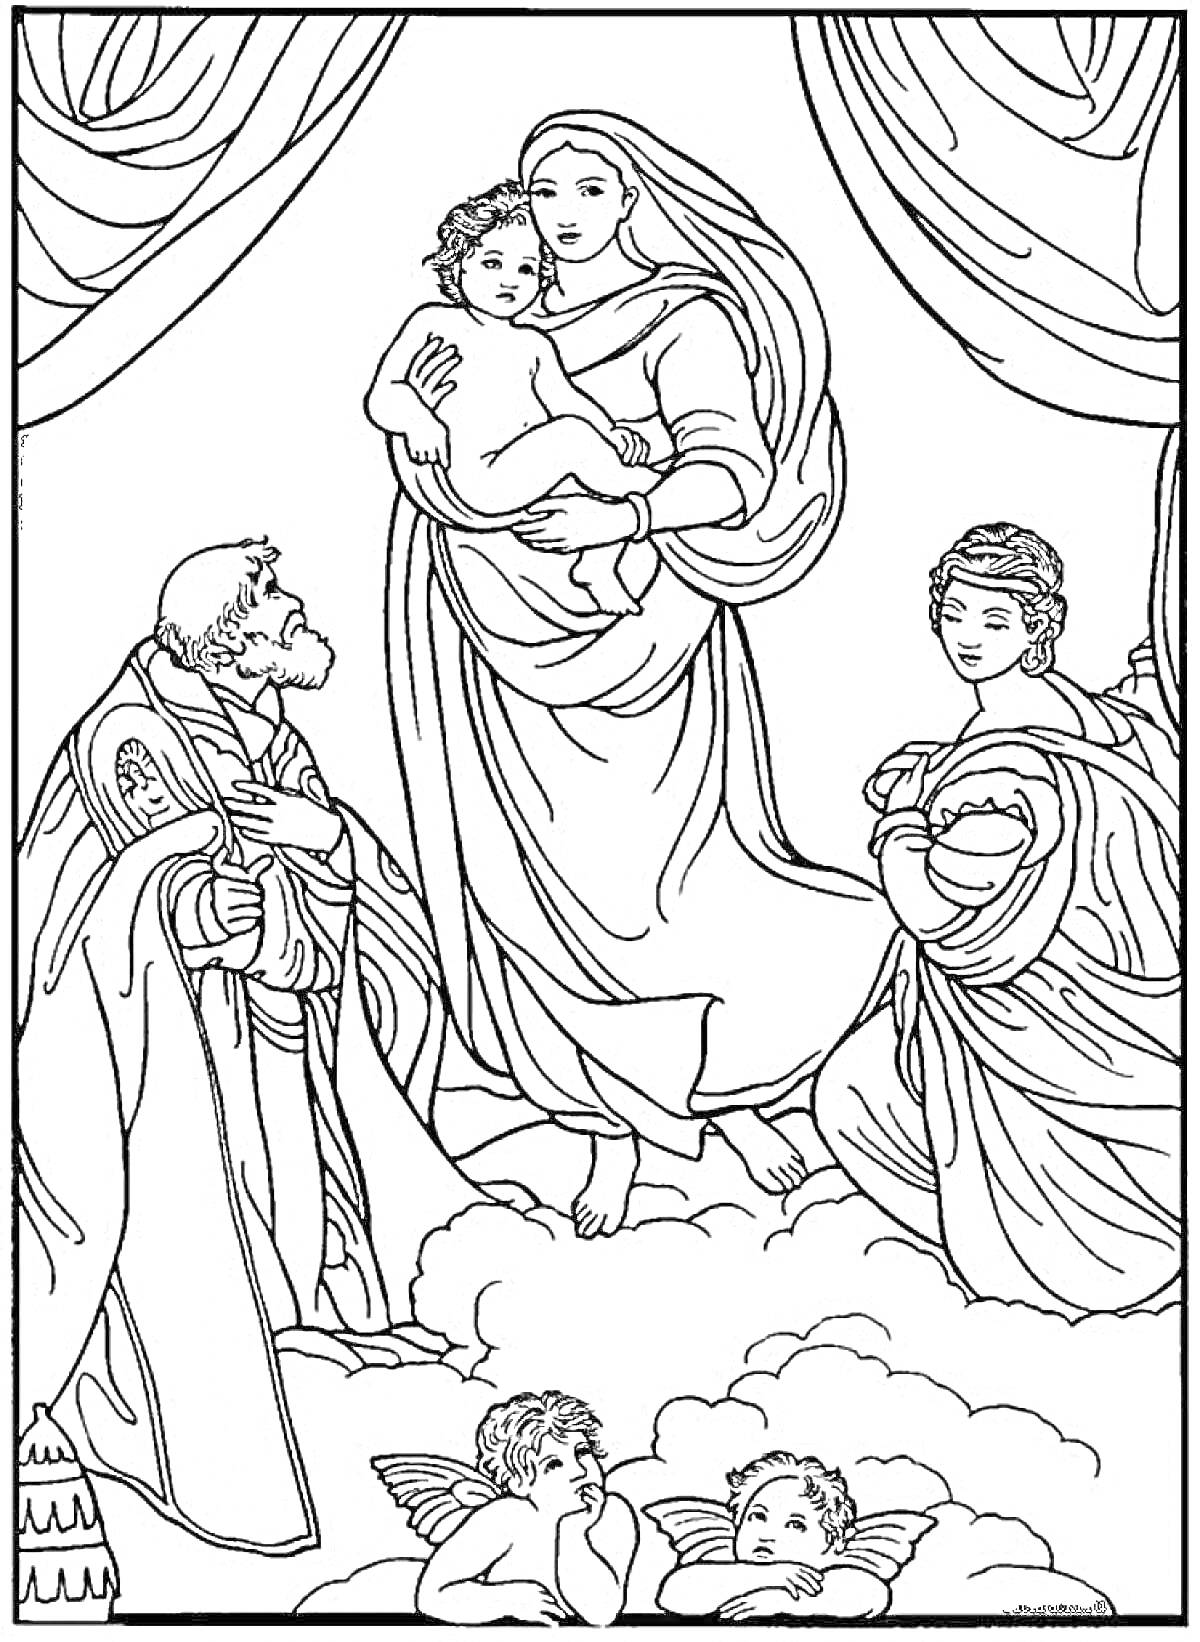 Раскраска Святой с ребёнком на руках, два святых рядом, ангелы на облаках